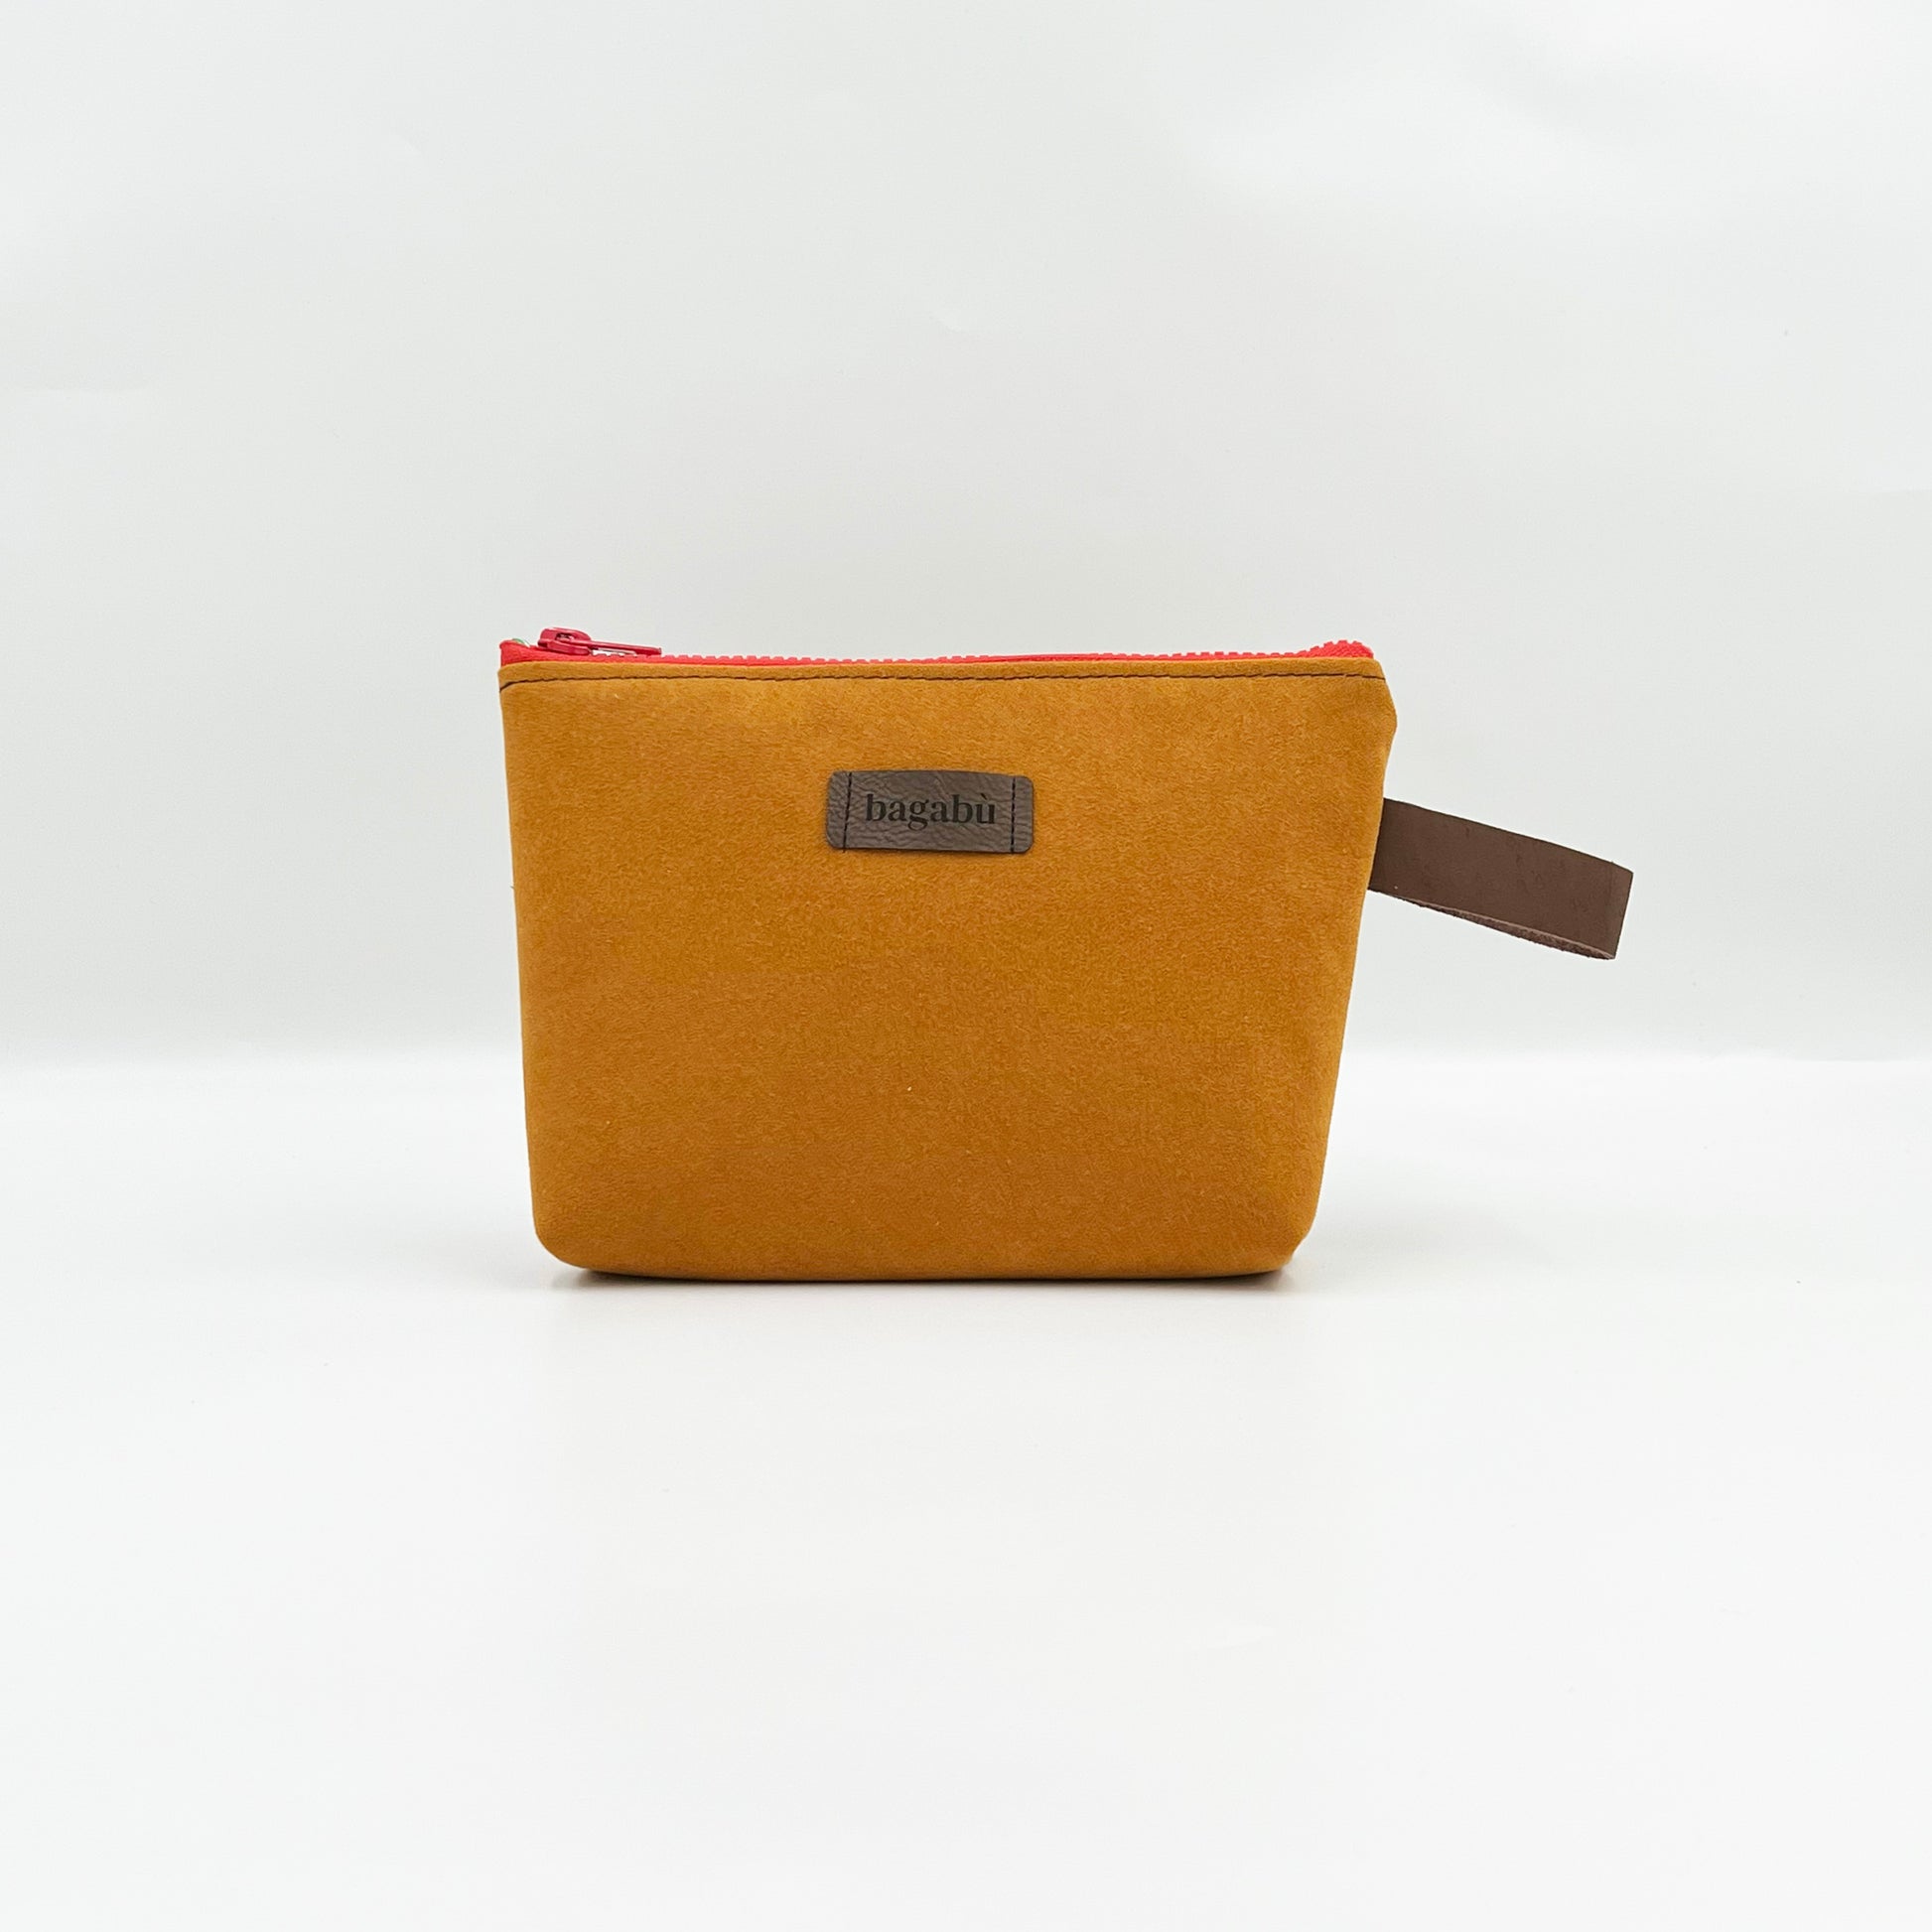 Mini Toiletry Bag in Orange for Travel-Sized Essentials - Bagabù